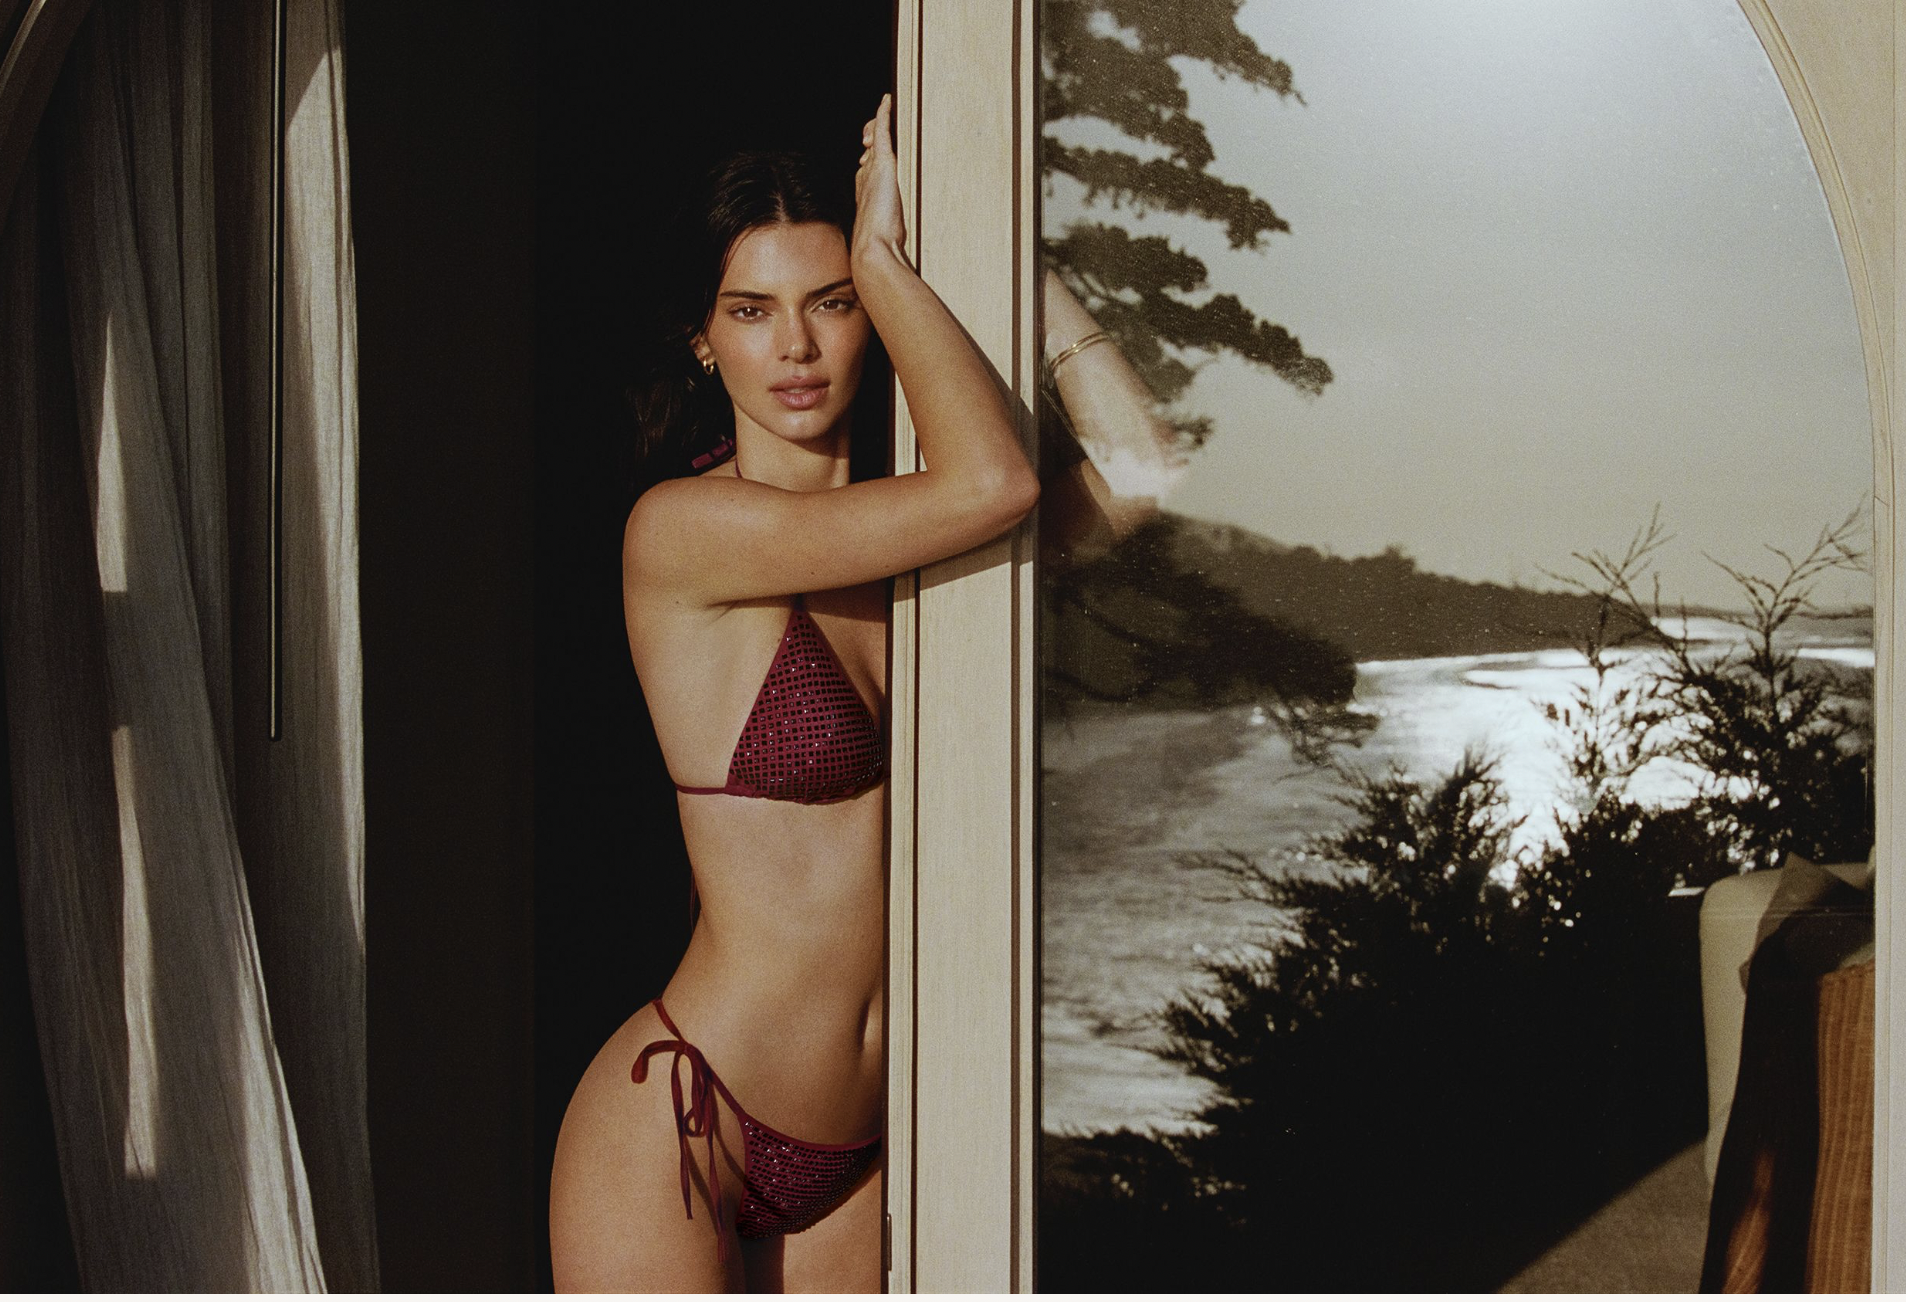 Oι επιλογές της Kendall Jenner για ένα κομψό, cool και elegant καλοκαίρι με μπικίνι Calzedonia